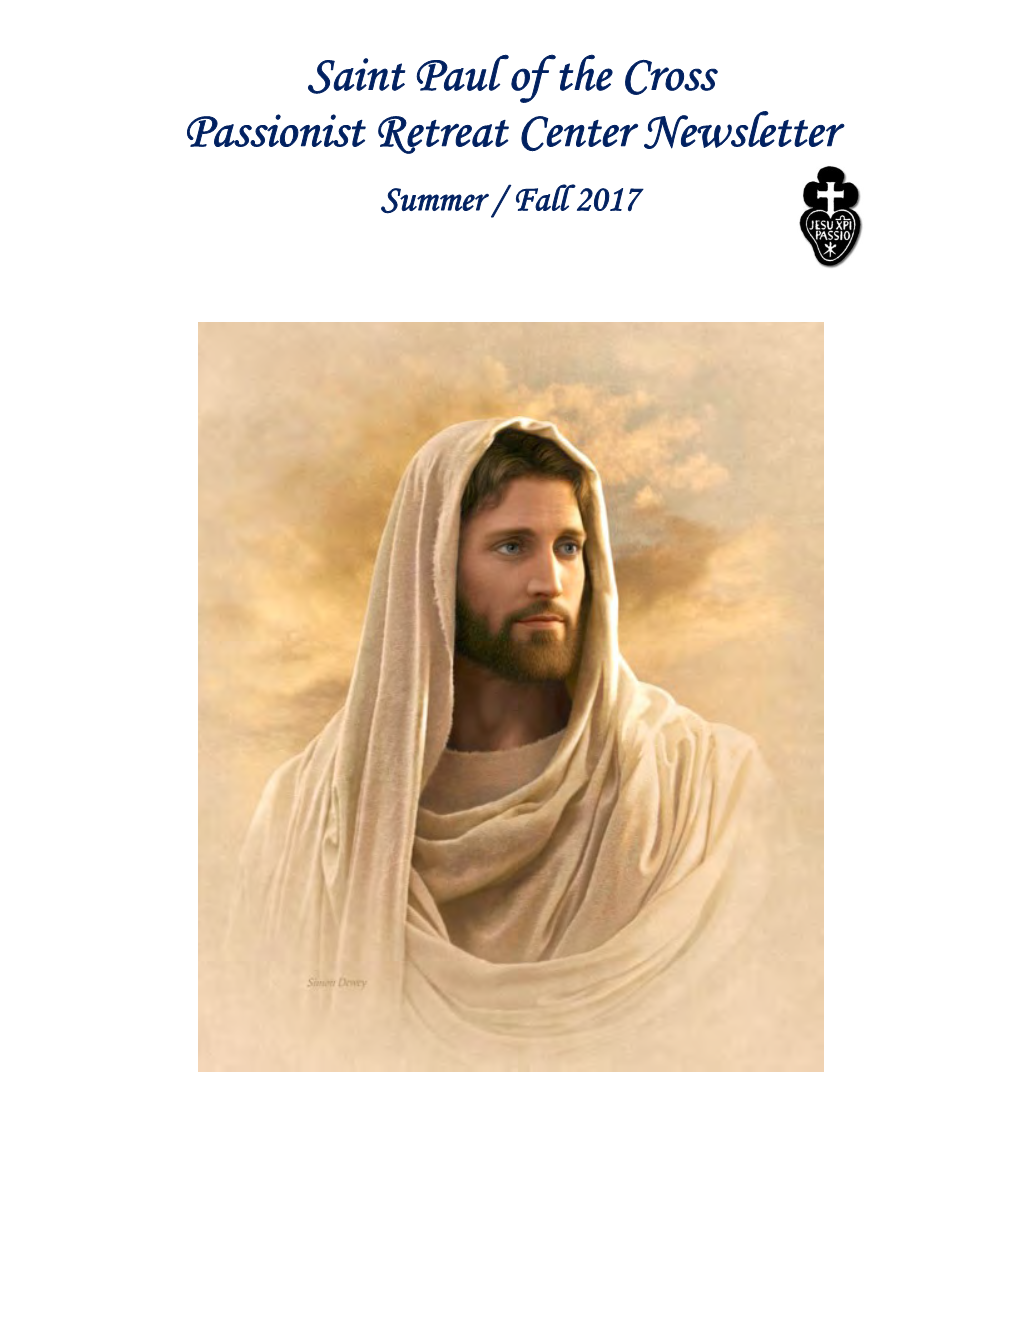 Saint Paul of the Cross Passionist Retreat Center Newsletter Summer / Fall 2017